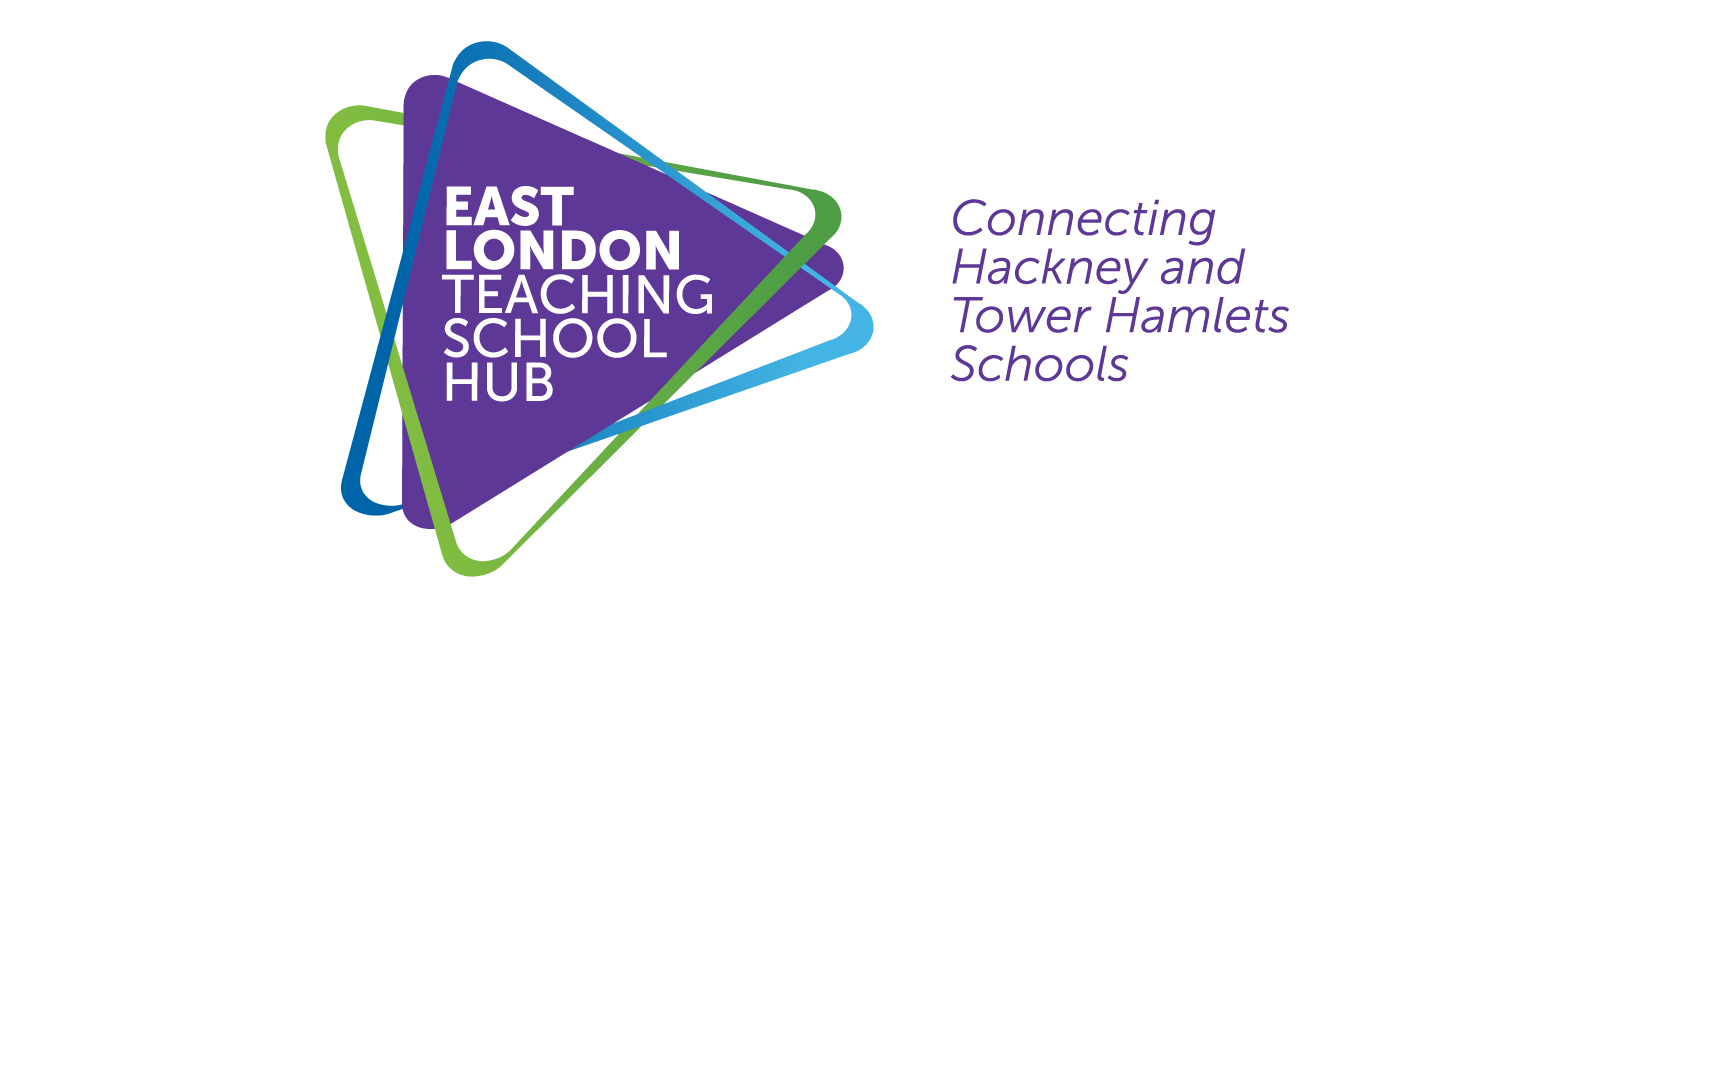 East London Teaching School Hub